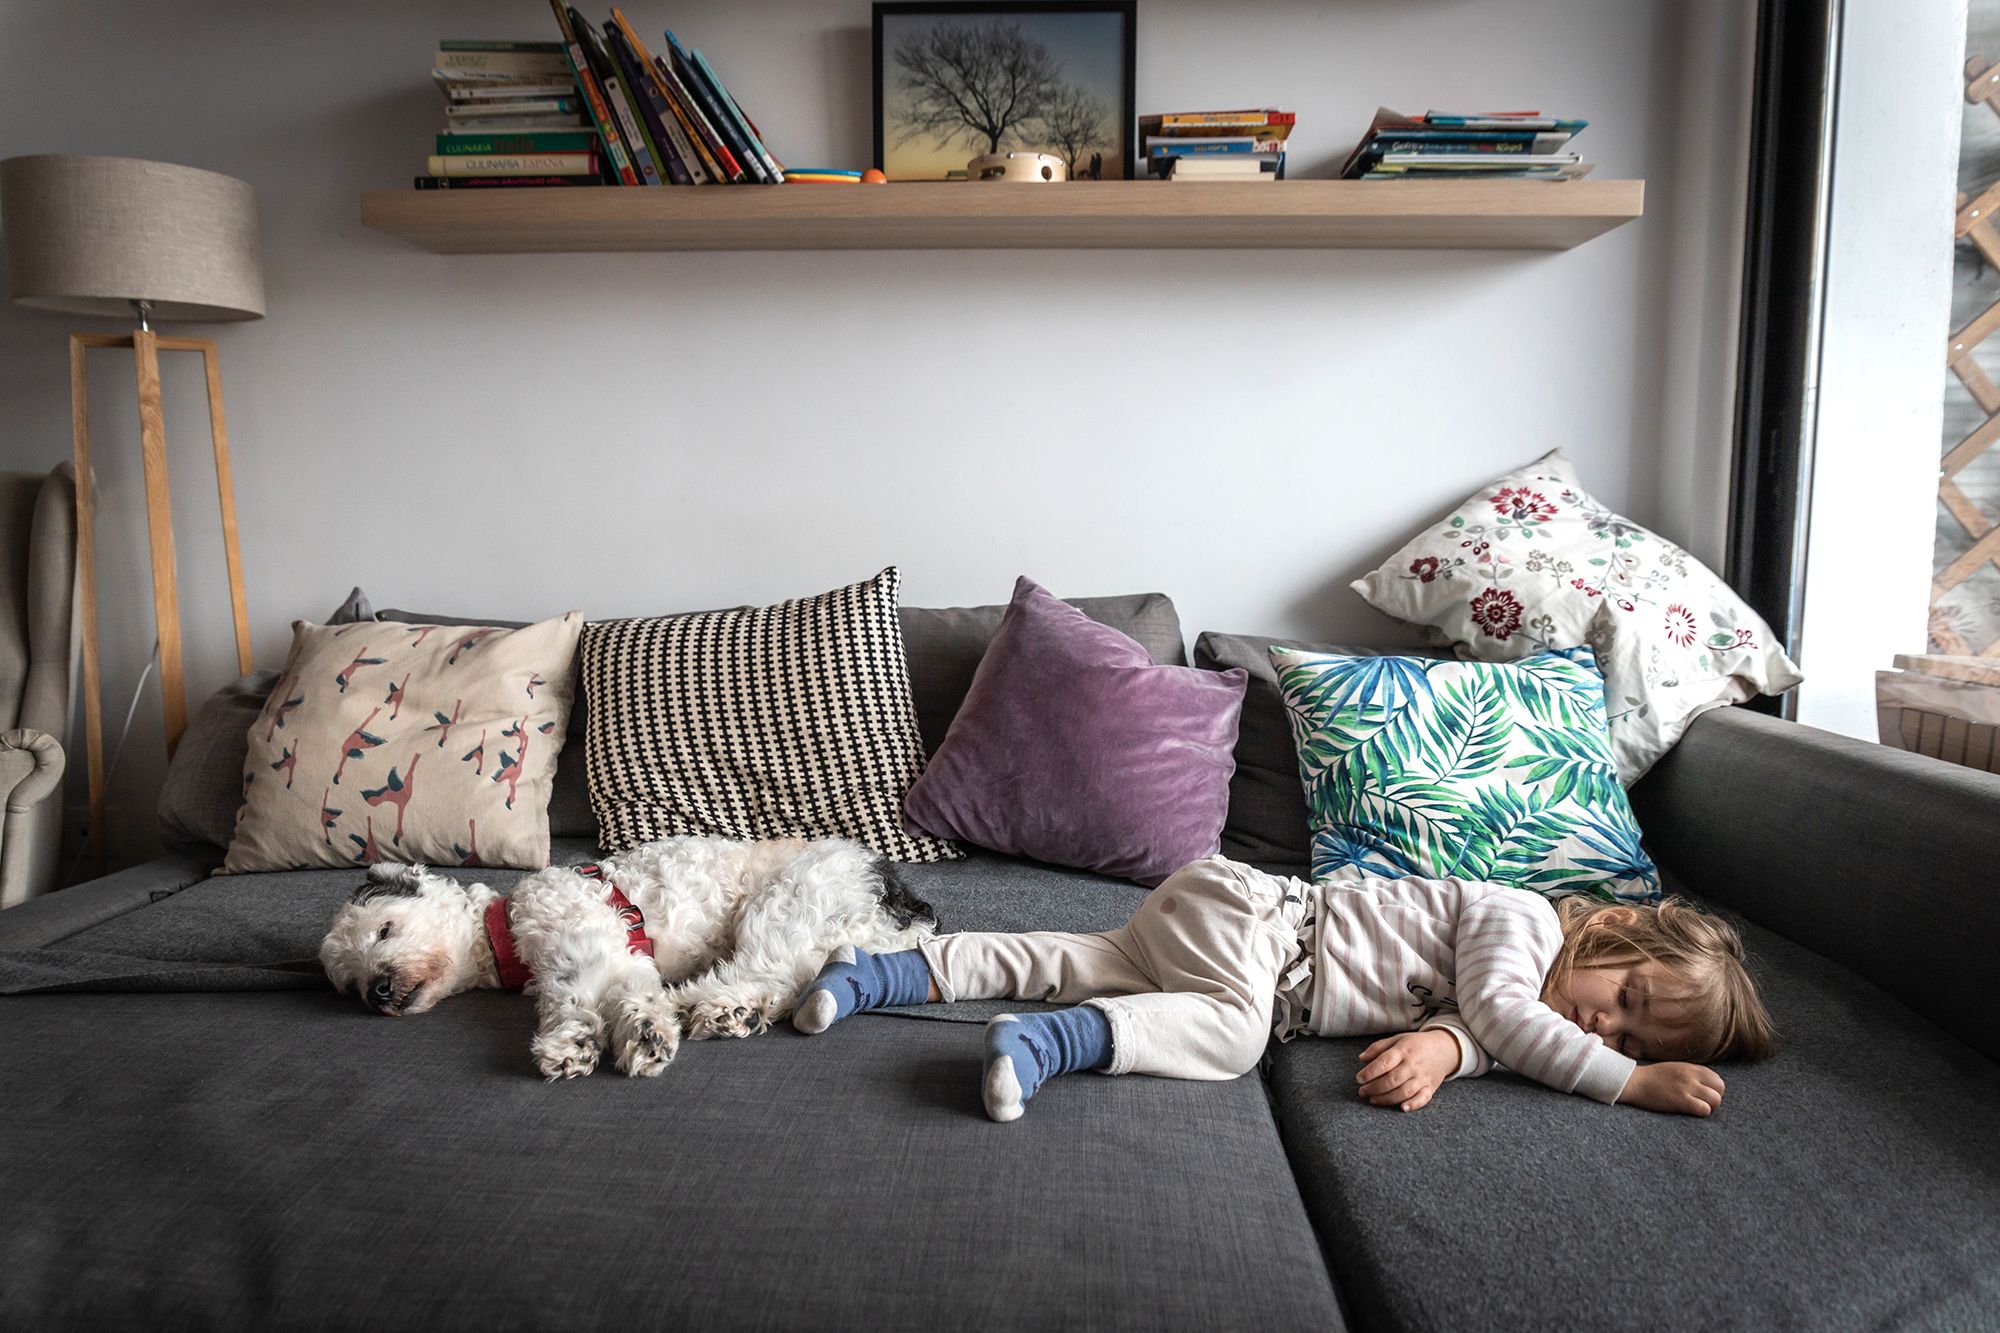 Are Pottery Barn Sleeper Sofas Comfortable For A Cozy Nights Sleep?